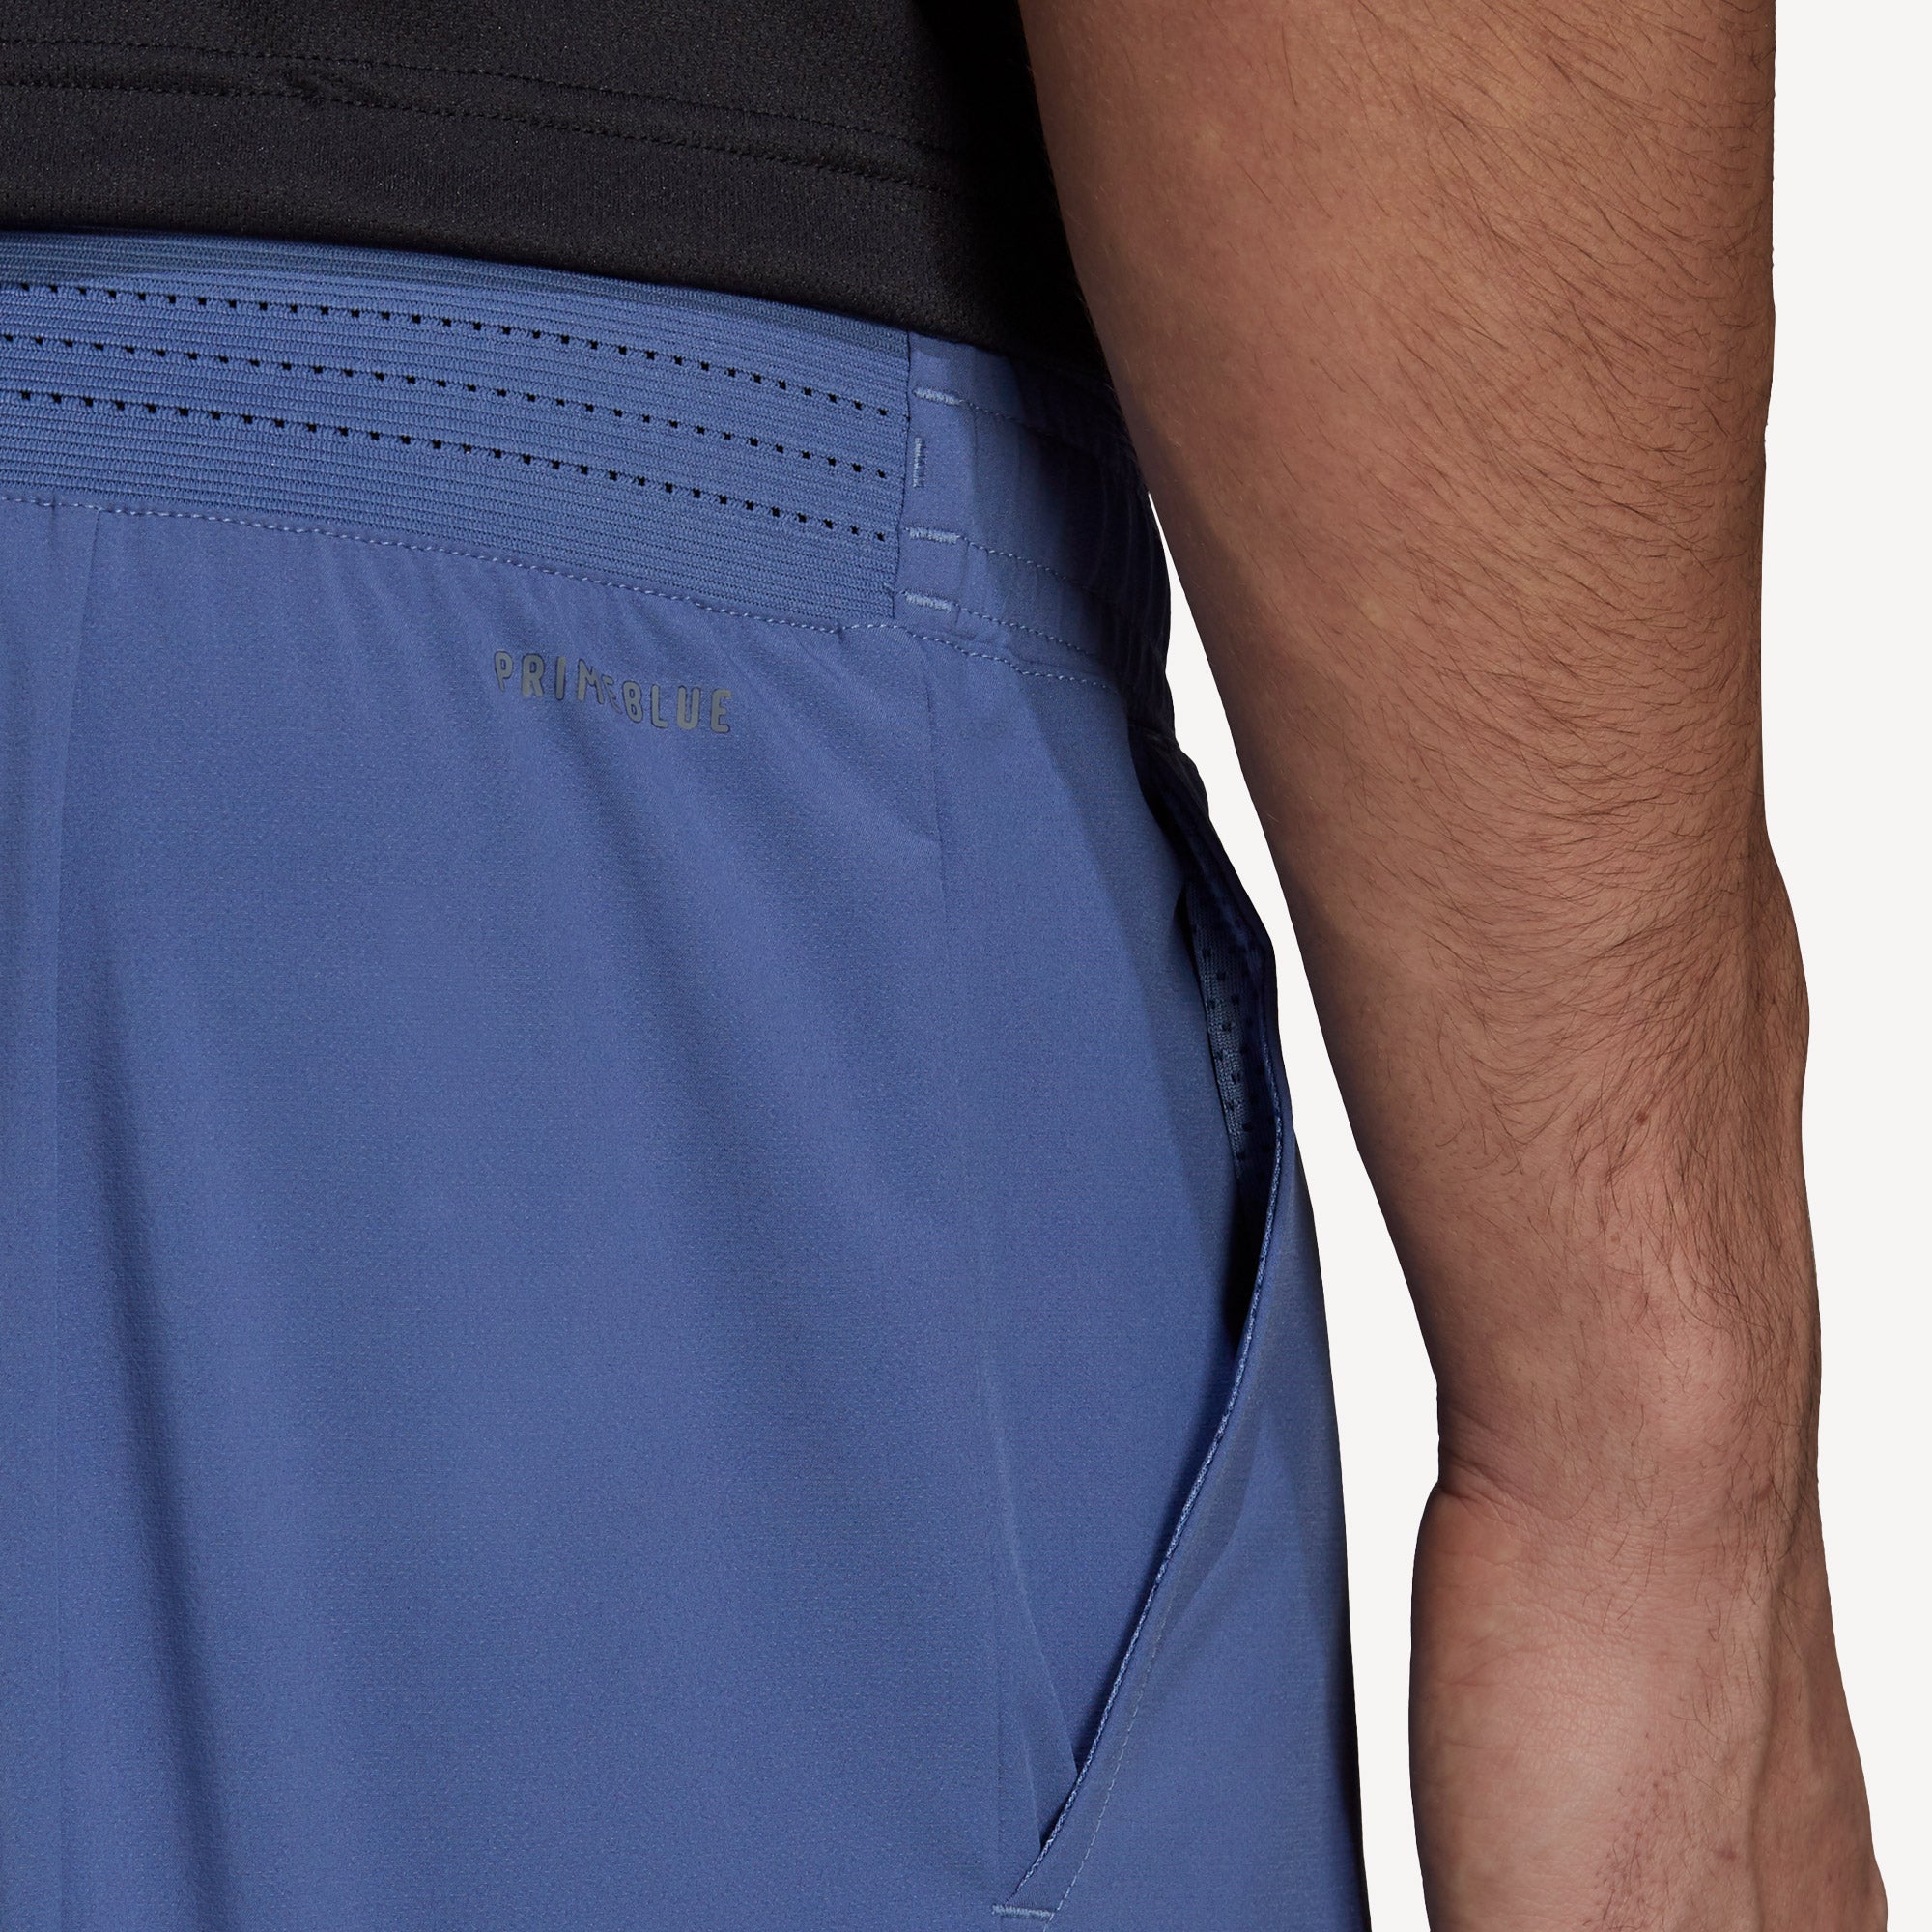 adidas Ergo Primeblue Men's 9-Inch Tennis Shorts Blue (4)